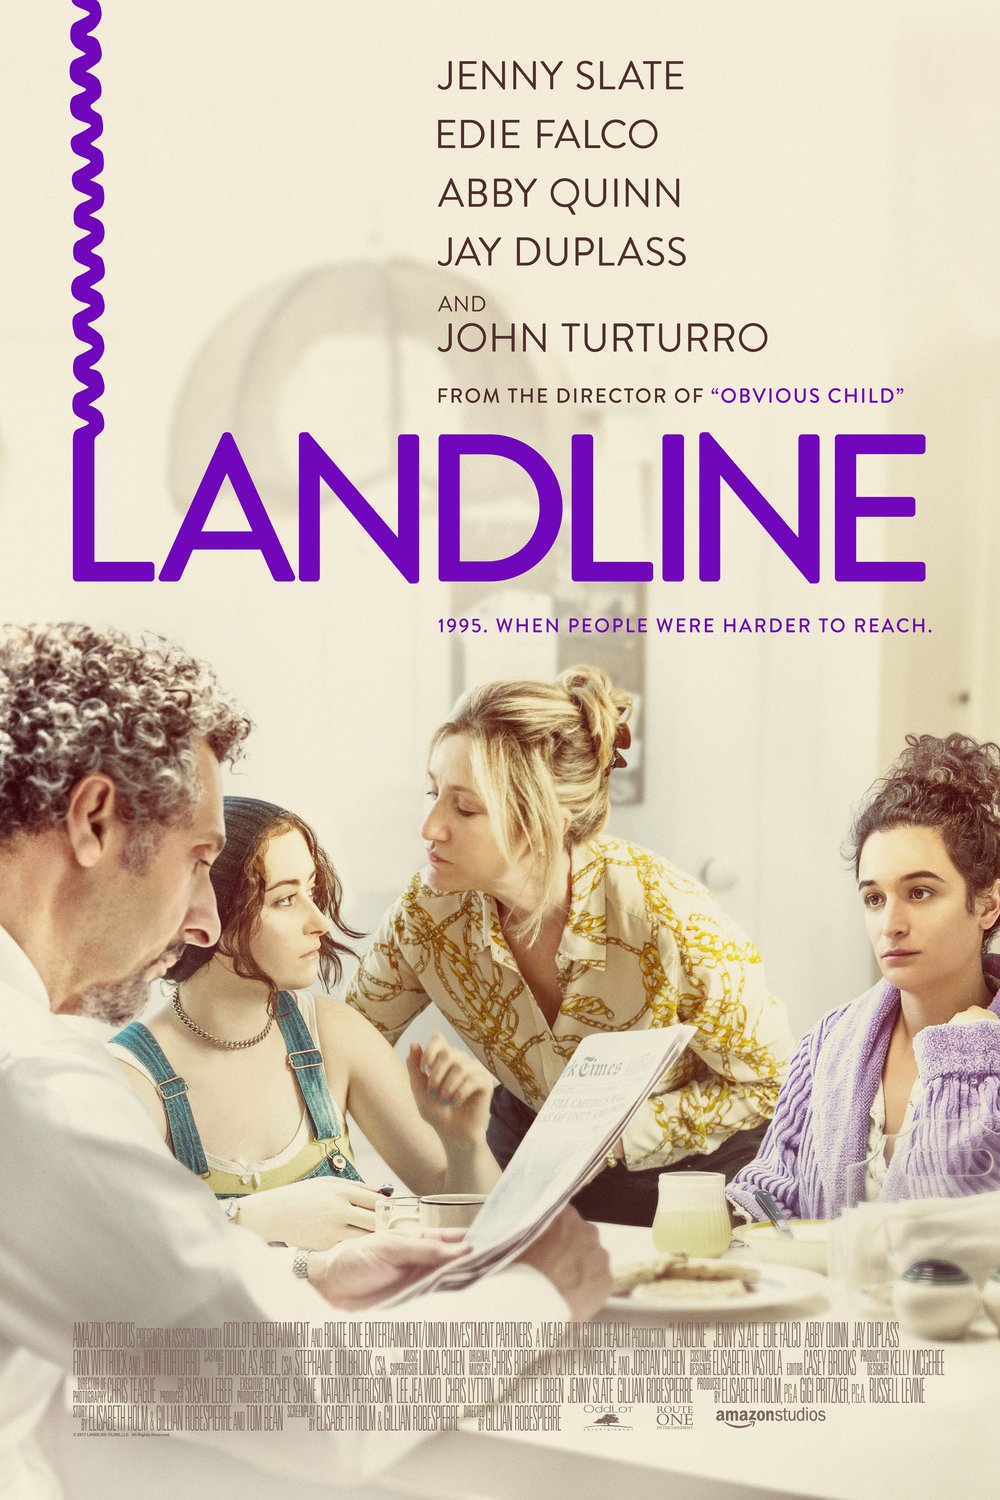 Poster of the movie Landline